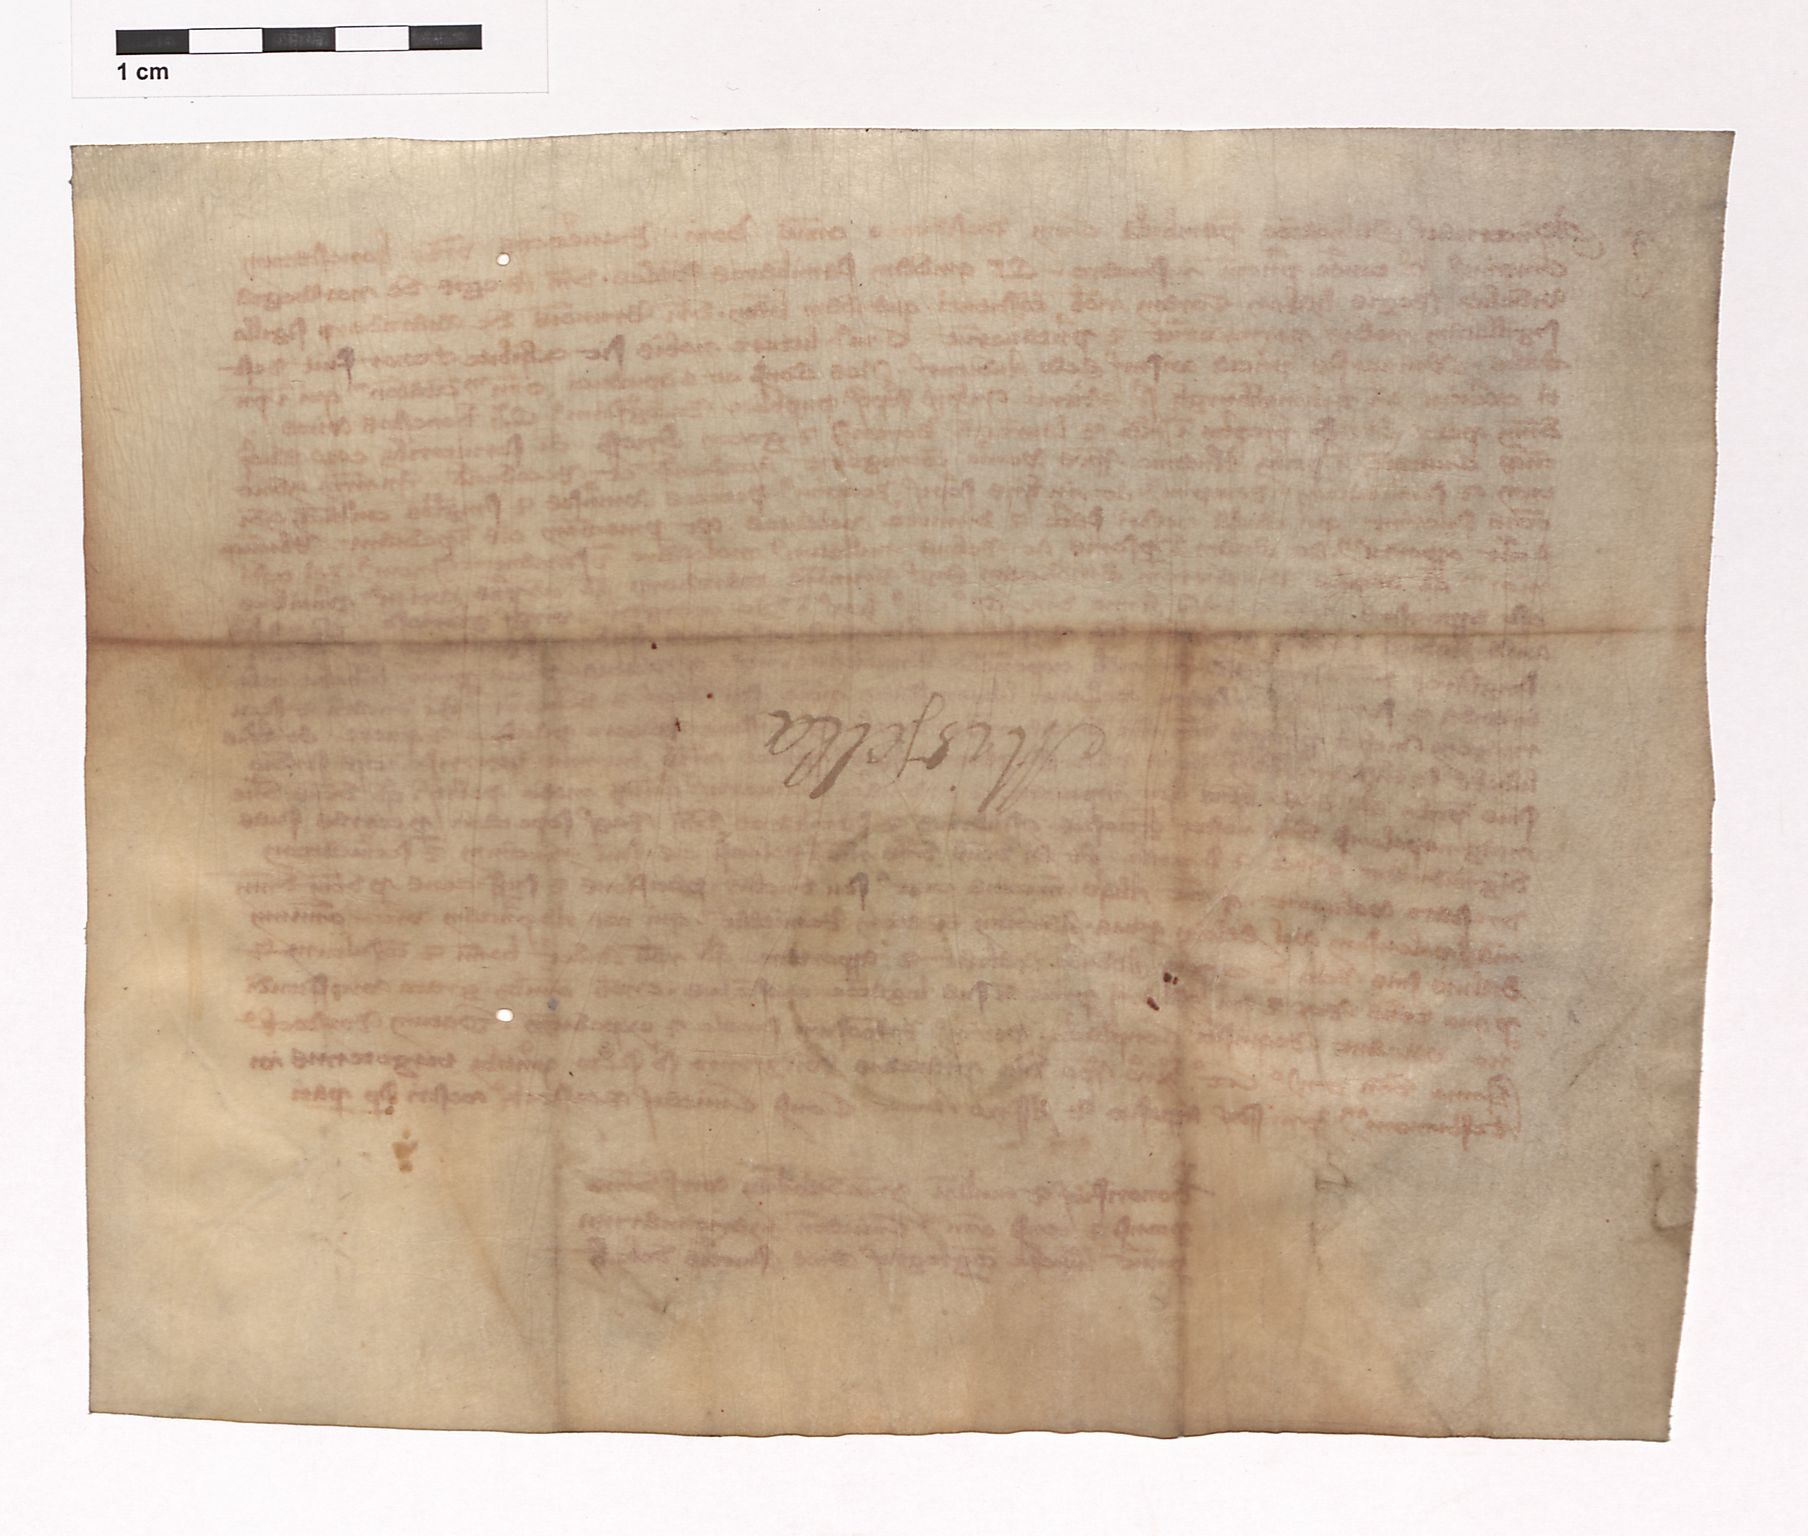 07.1 Urkunden, 3 Auswärtige Beziehungen (Externa), AHL/-/21: Norwegen (Norvagica); Kontor zu Bergen, 1247-1747, s. 342